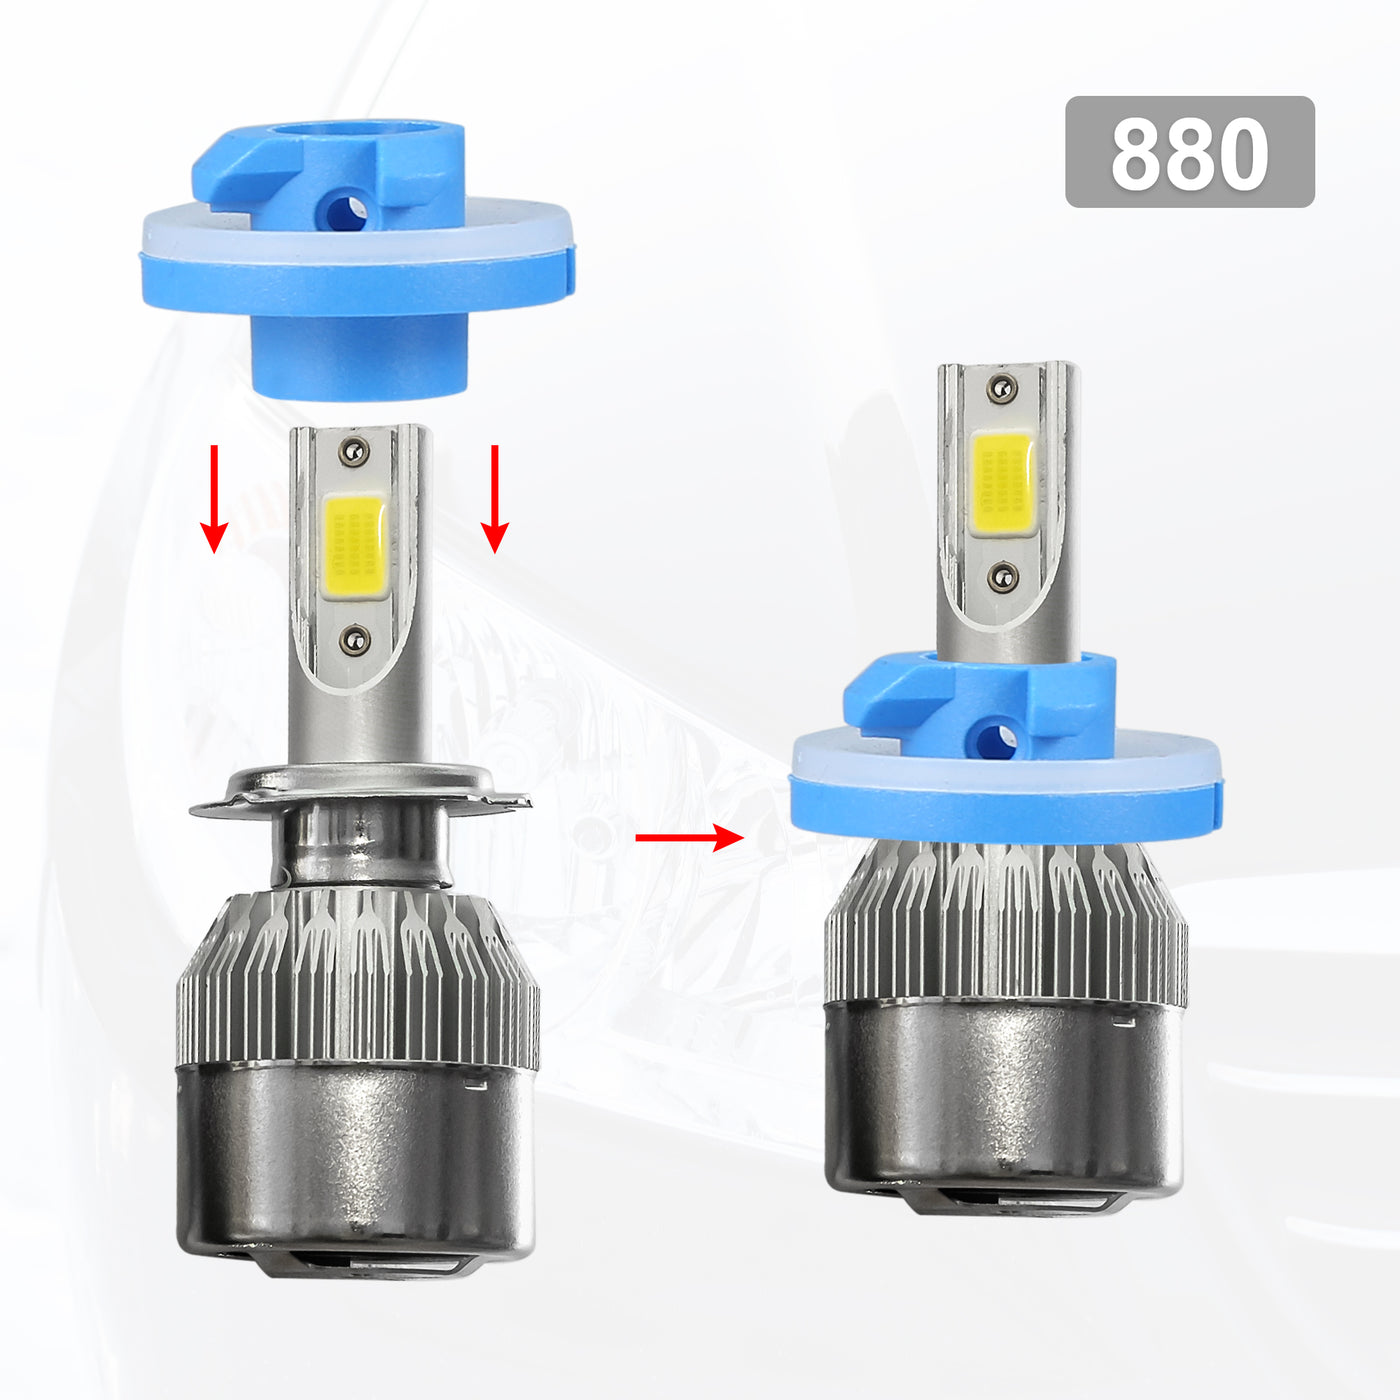 X AUTOHAUX 2pcs 880 LED Headlight Adapter Base Bulb Sockets Retainer Holder Universal for Car Blue